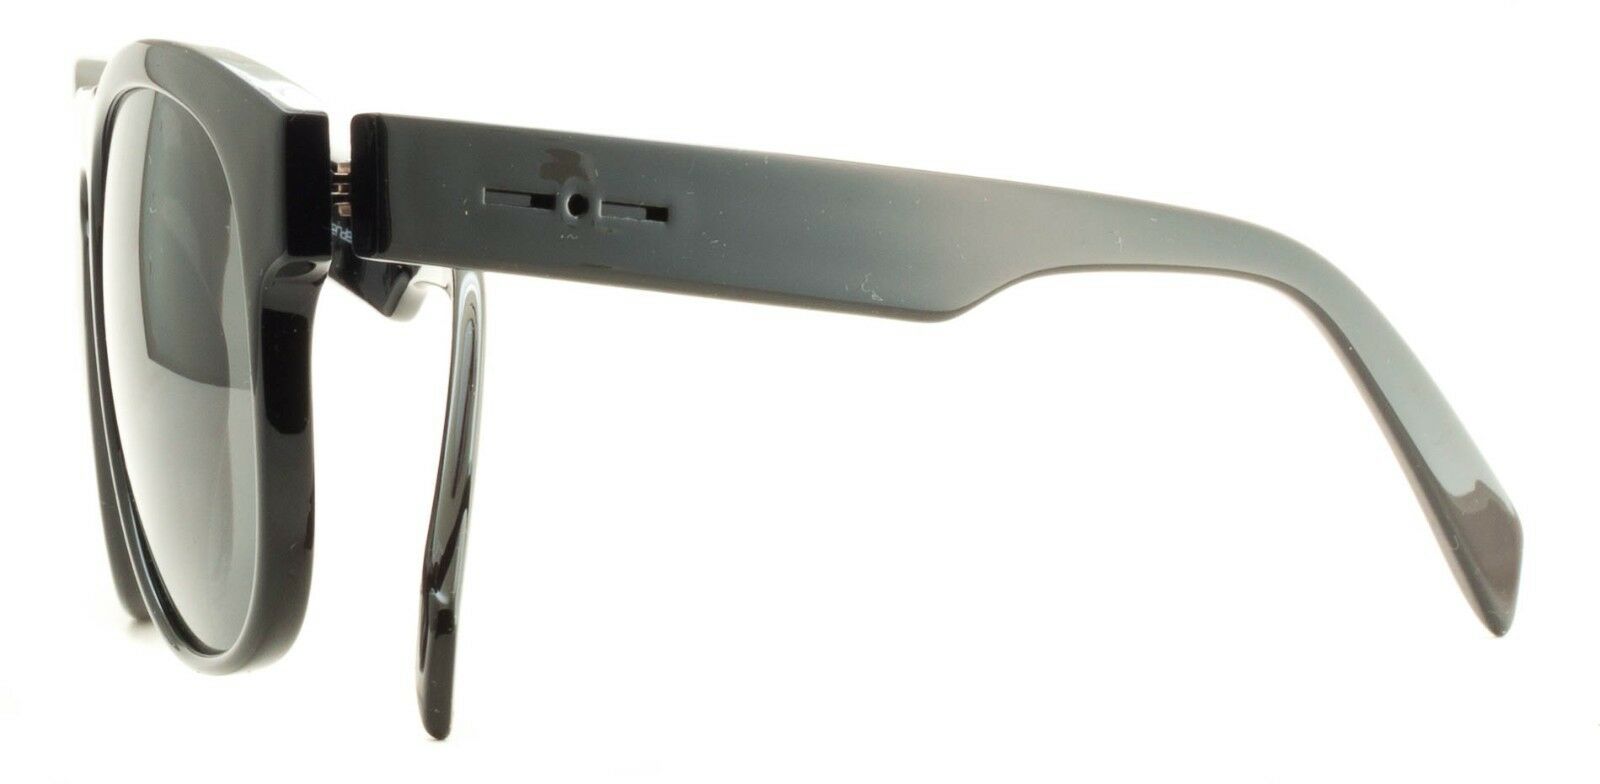 ITALIA INDEPENDENT 0902 009 GLS Sunglasses Shades Frames Eyeglasses New - Italy